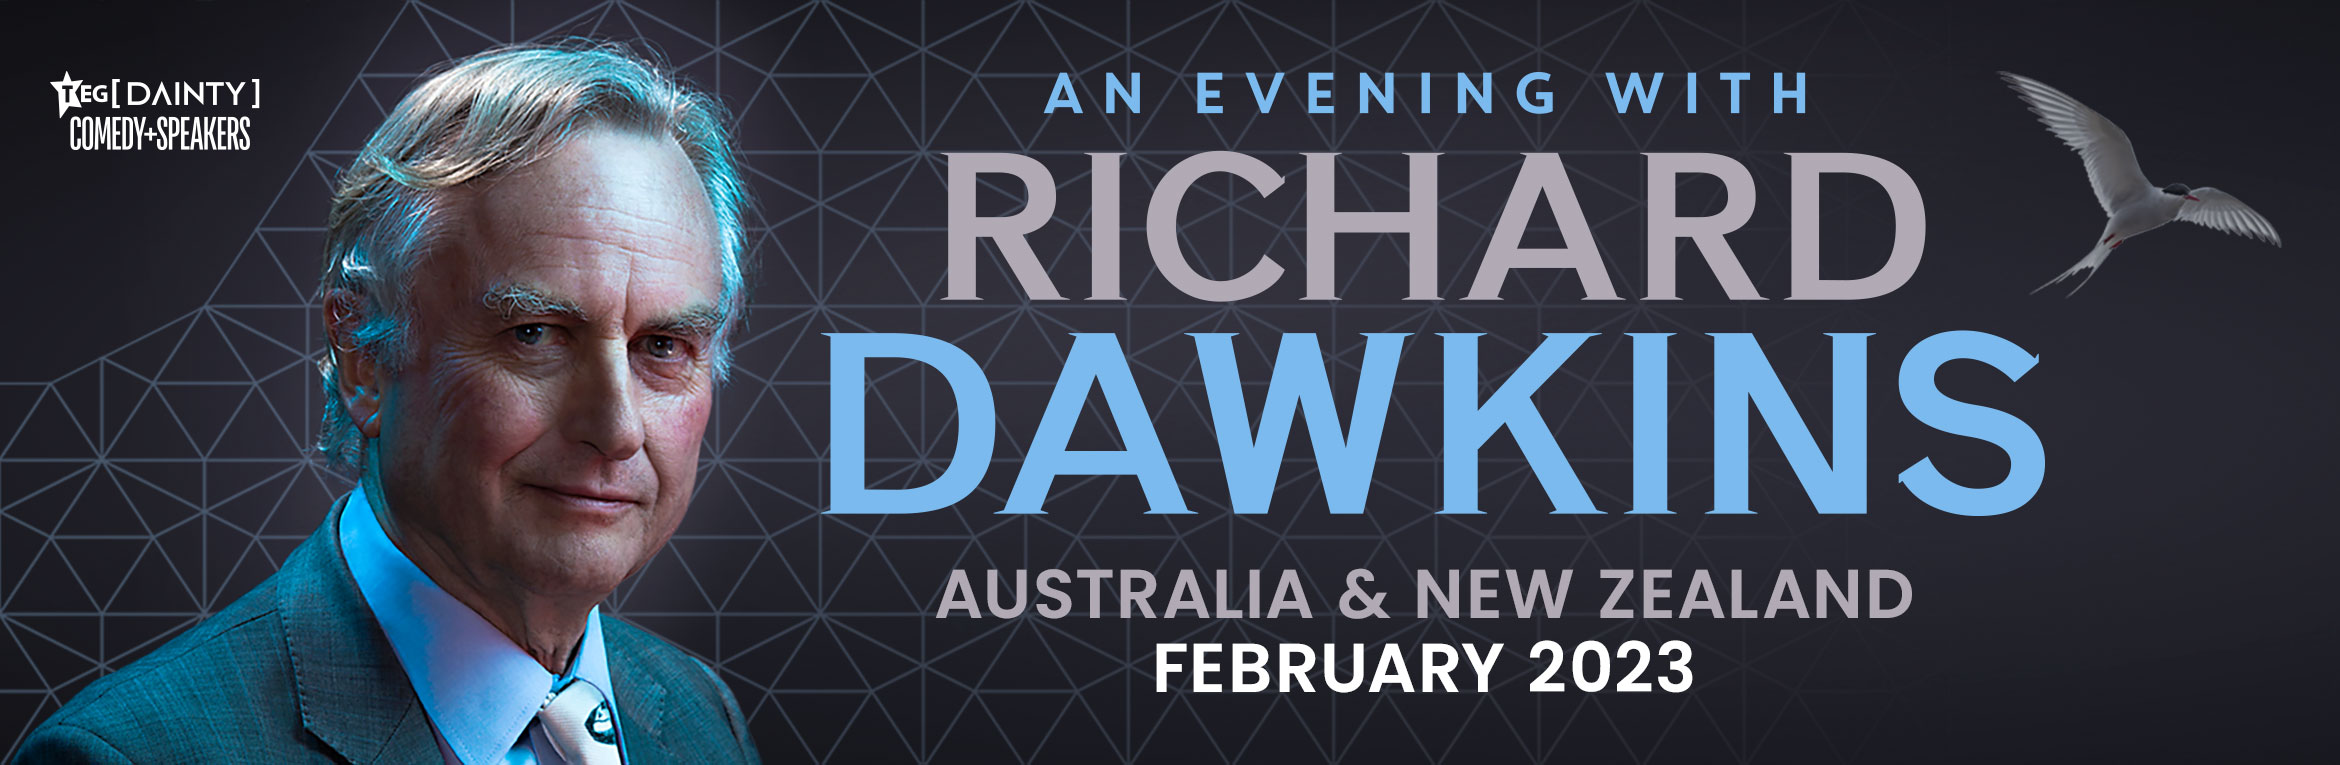 richard dawkins tour 2022